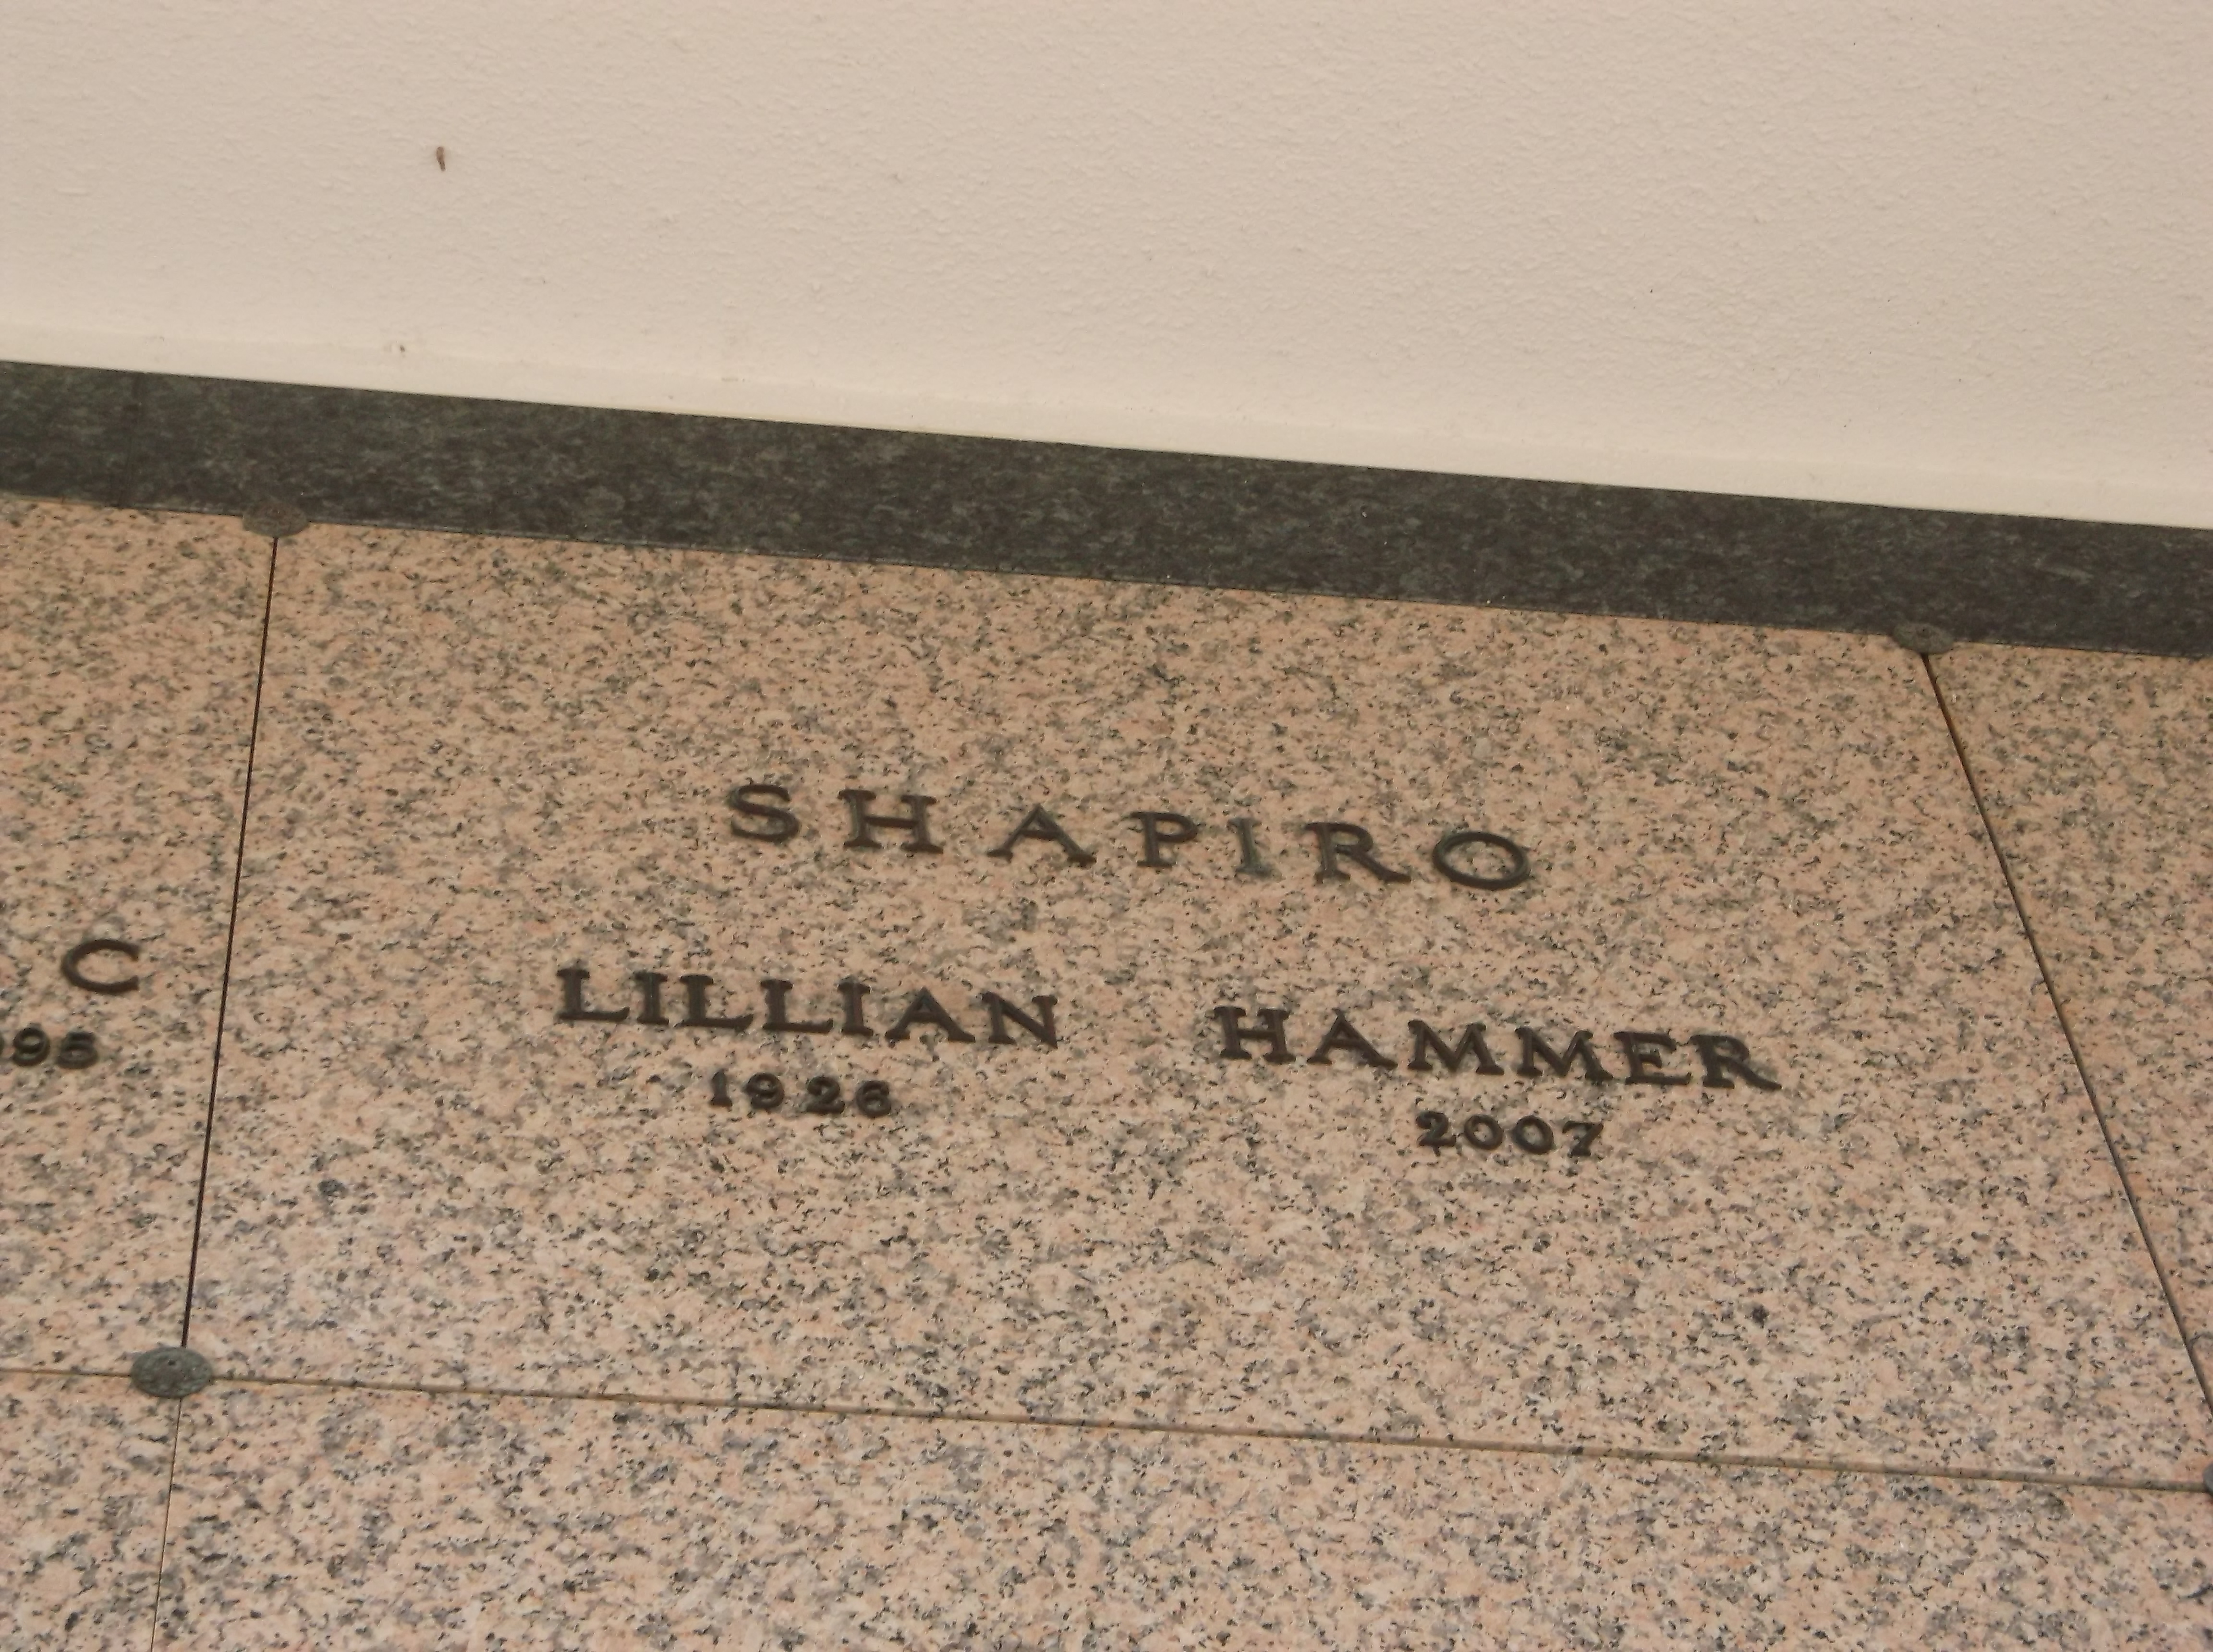 Lillian Hammer Shapiro